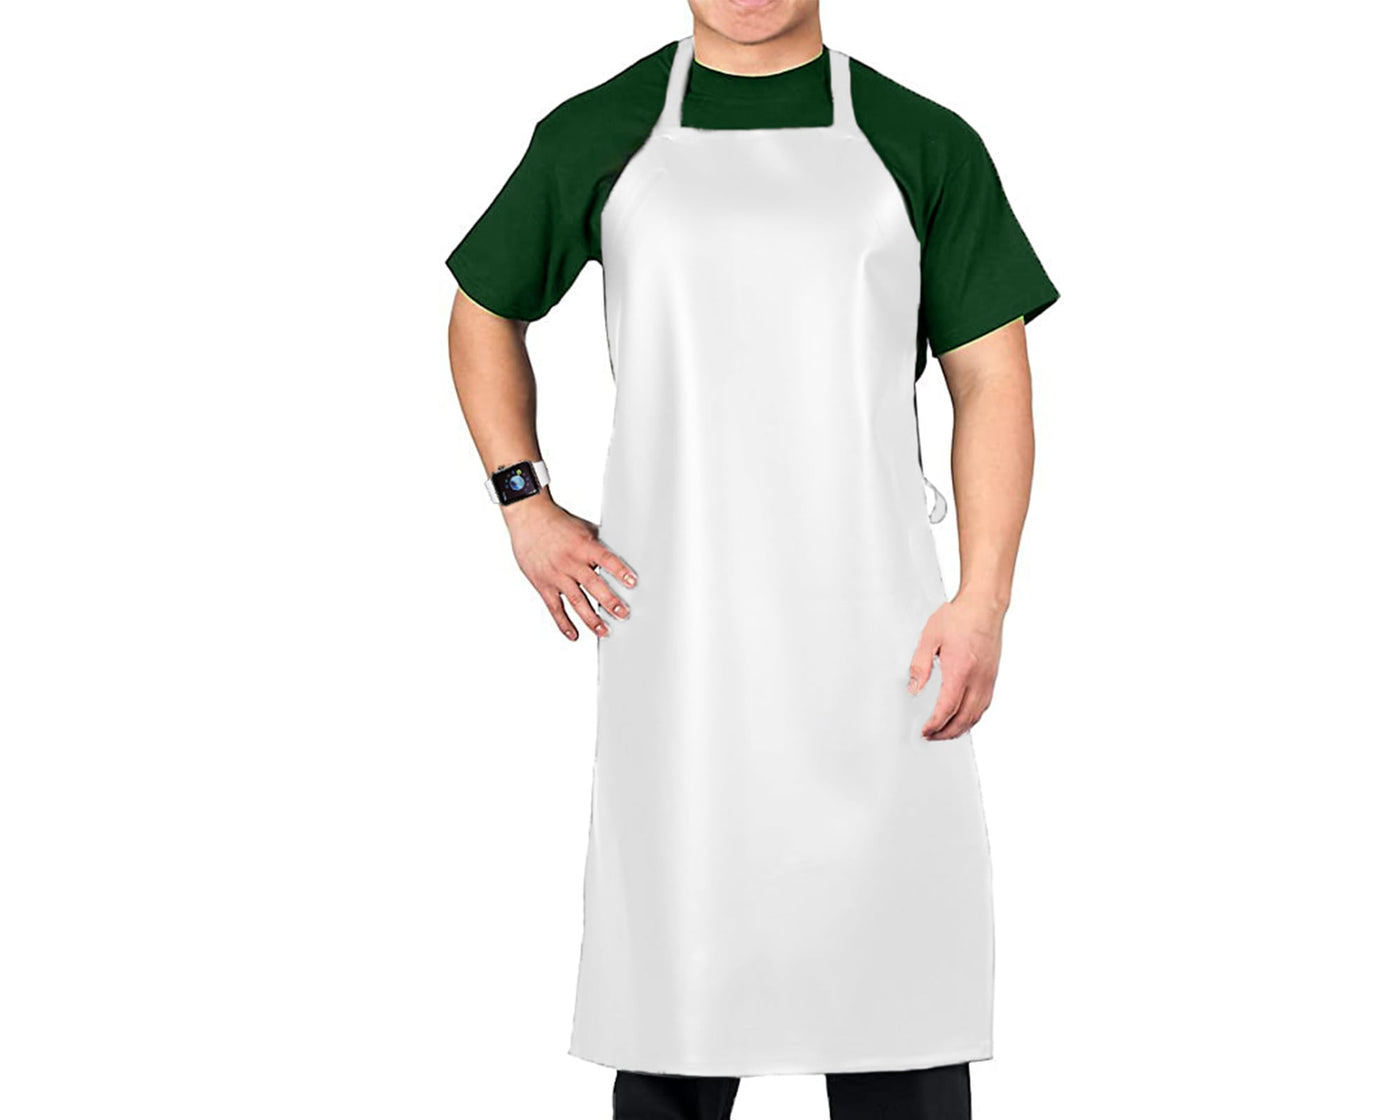 man wearing white vinyl apron used for dishwasher